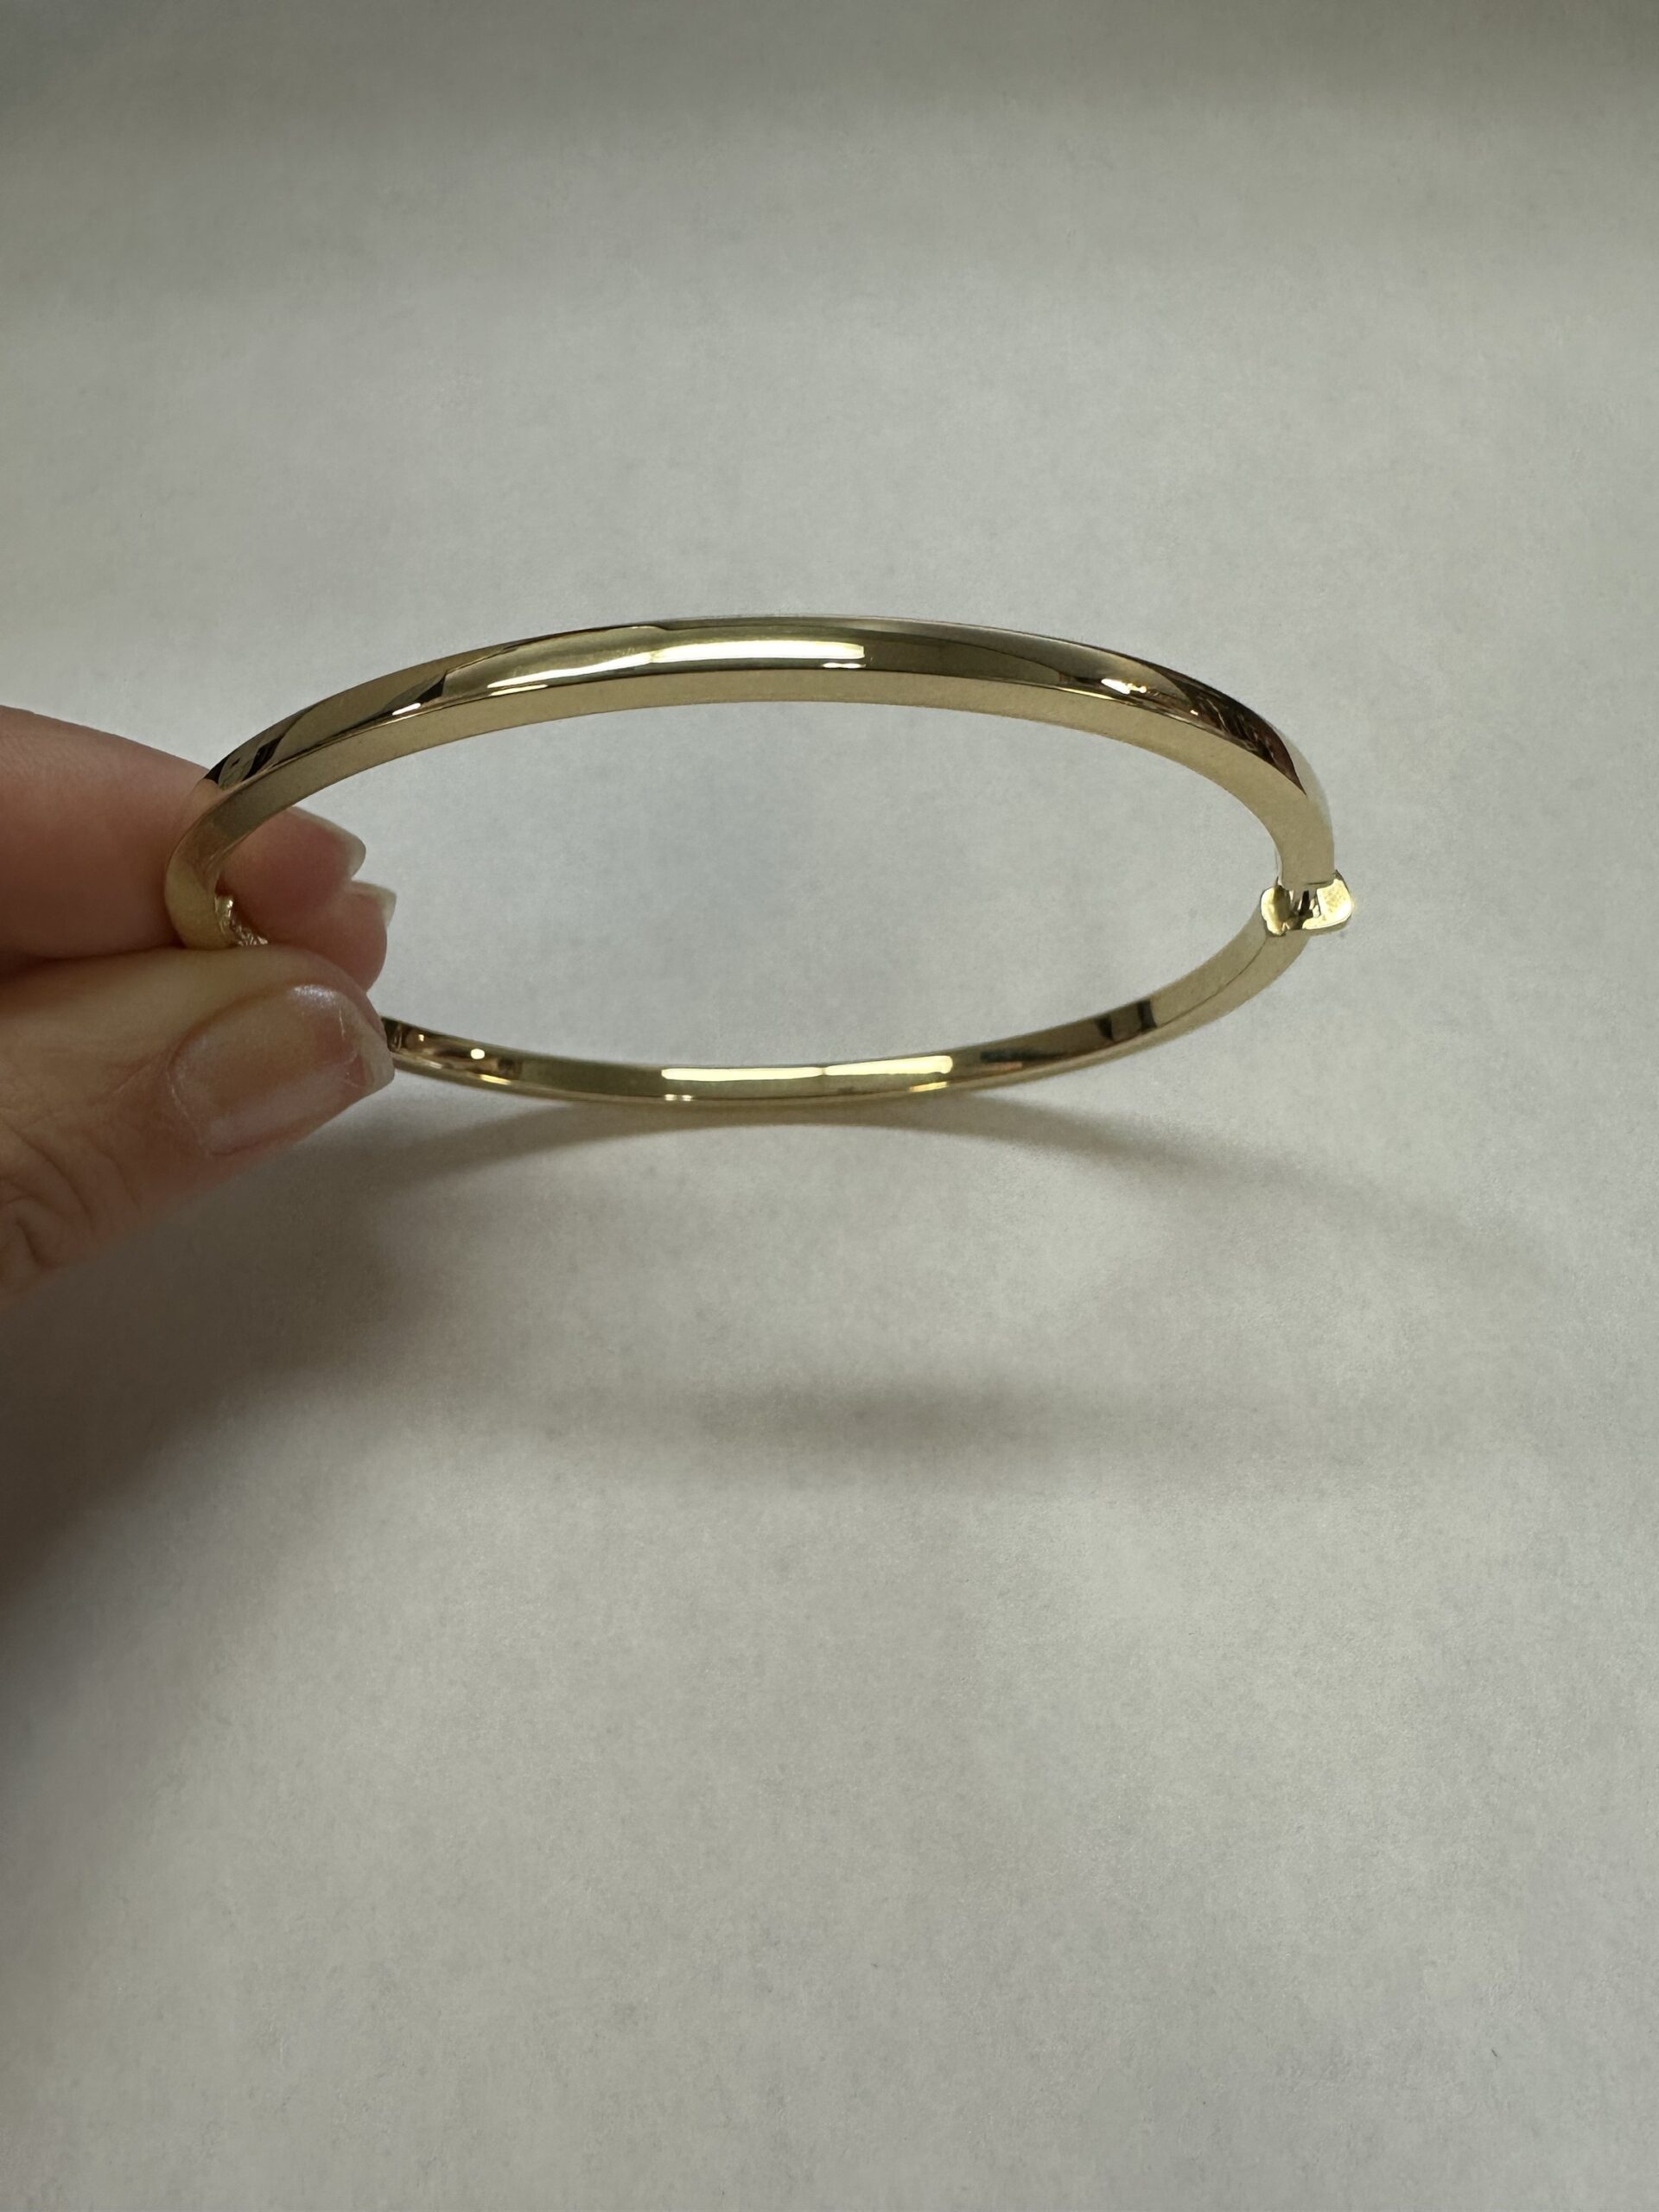 10k Yellow Gold Hammered Women's Bangle Bracelet, 7.5